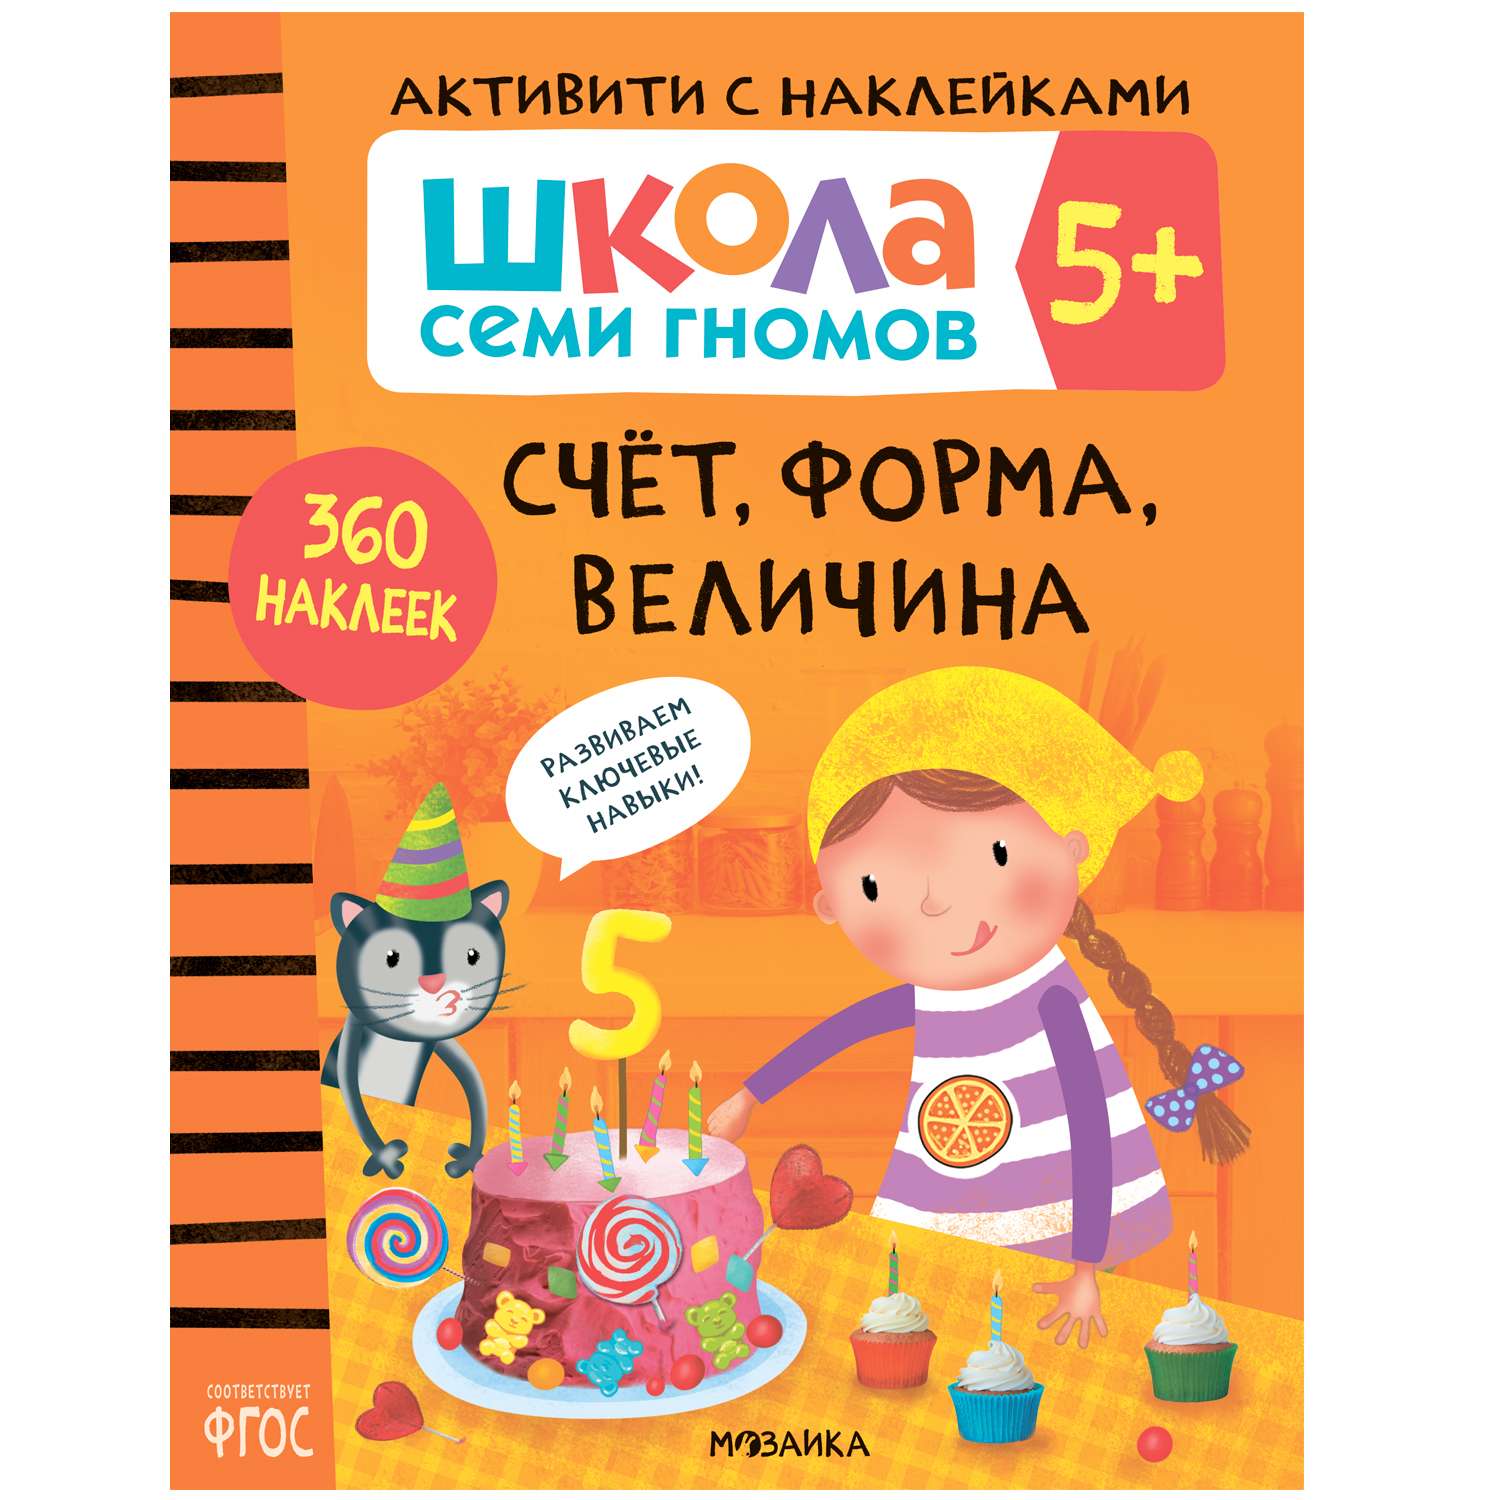 Комплект МОЗАИКА kids Школа Семи Гномов Активити с наклейками 5 - фото 2